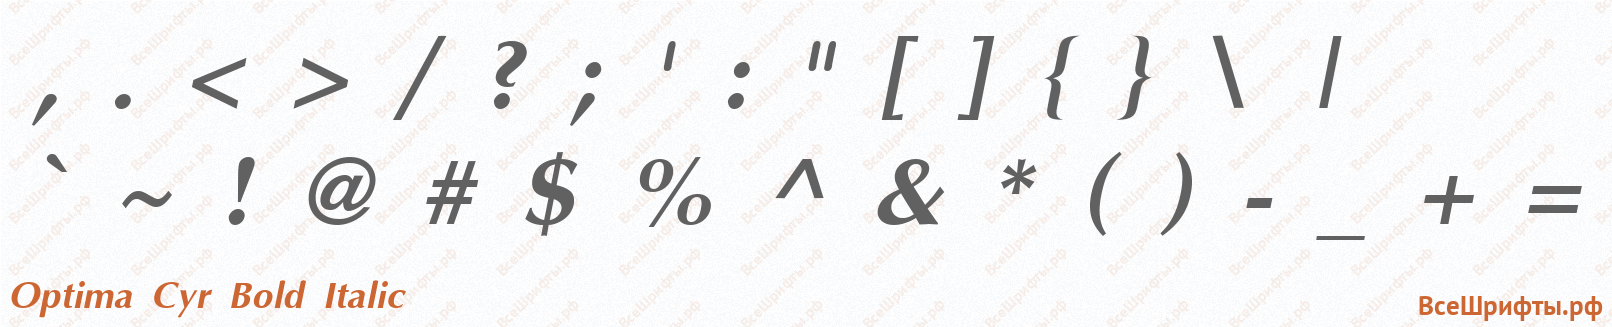 Шрифт Optima Cyr Bold Italic со знаками препинания и пунктуации